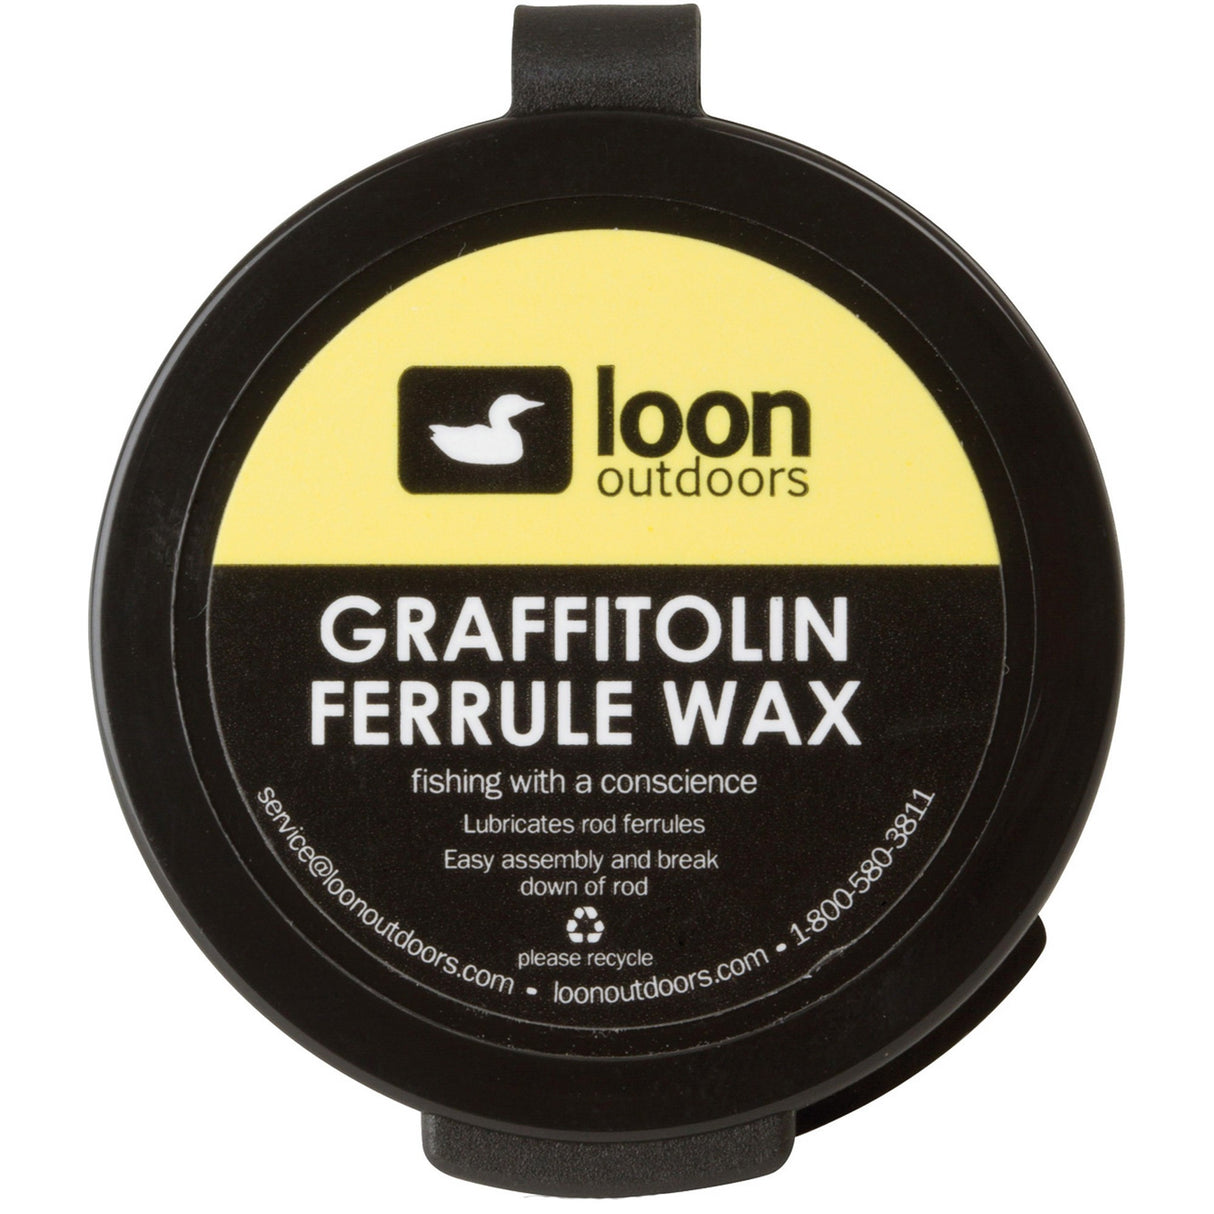 Loon Grafitolin Ferrule Wax